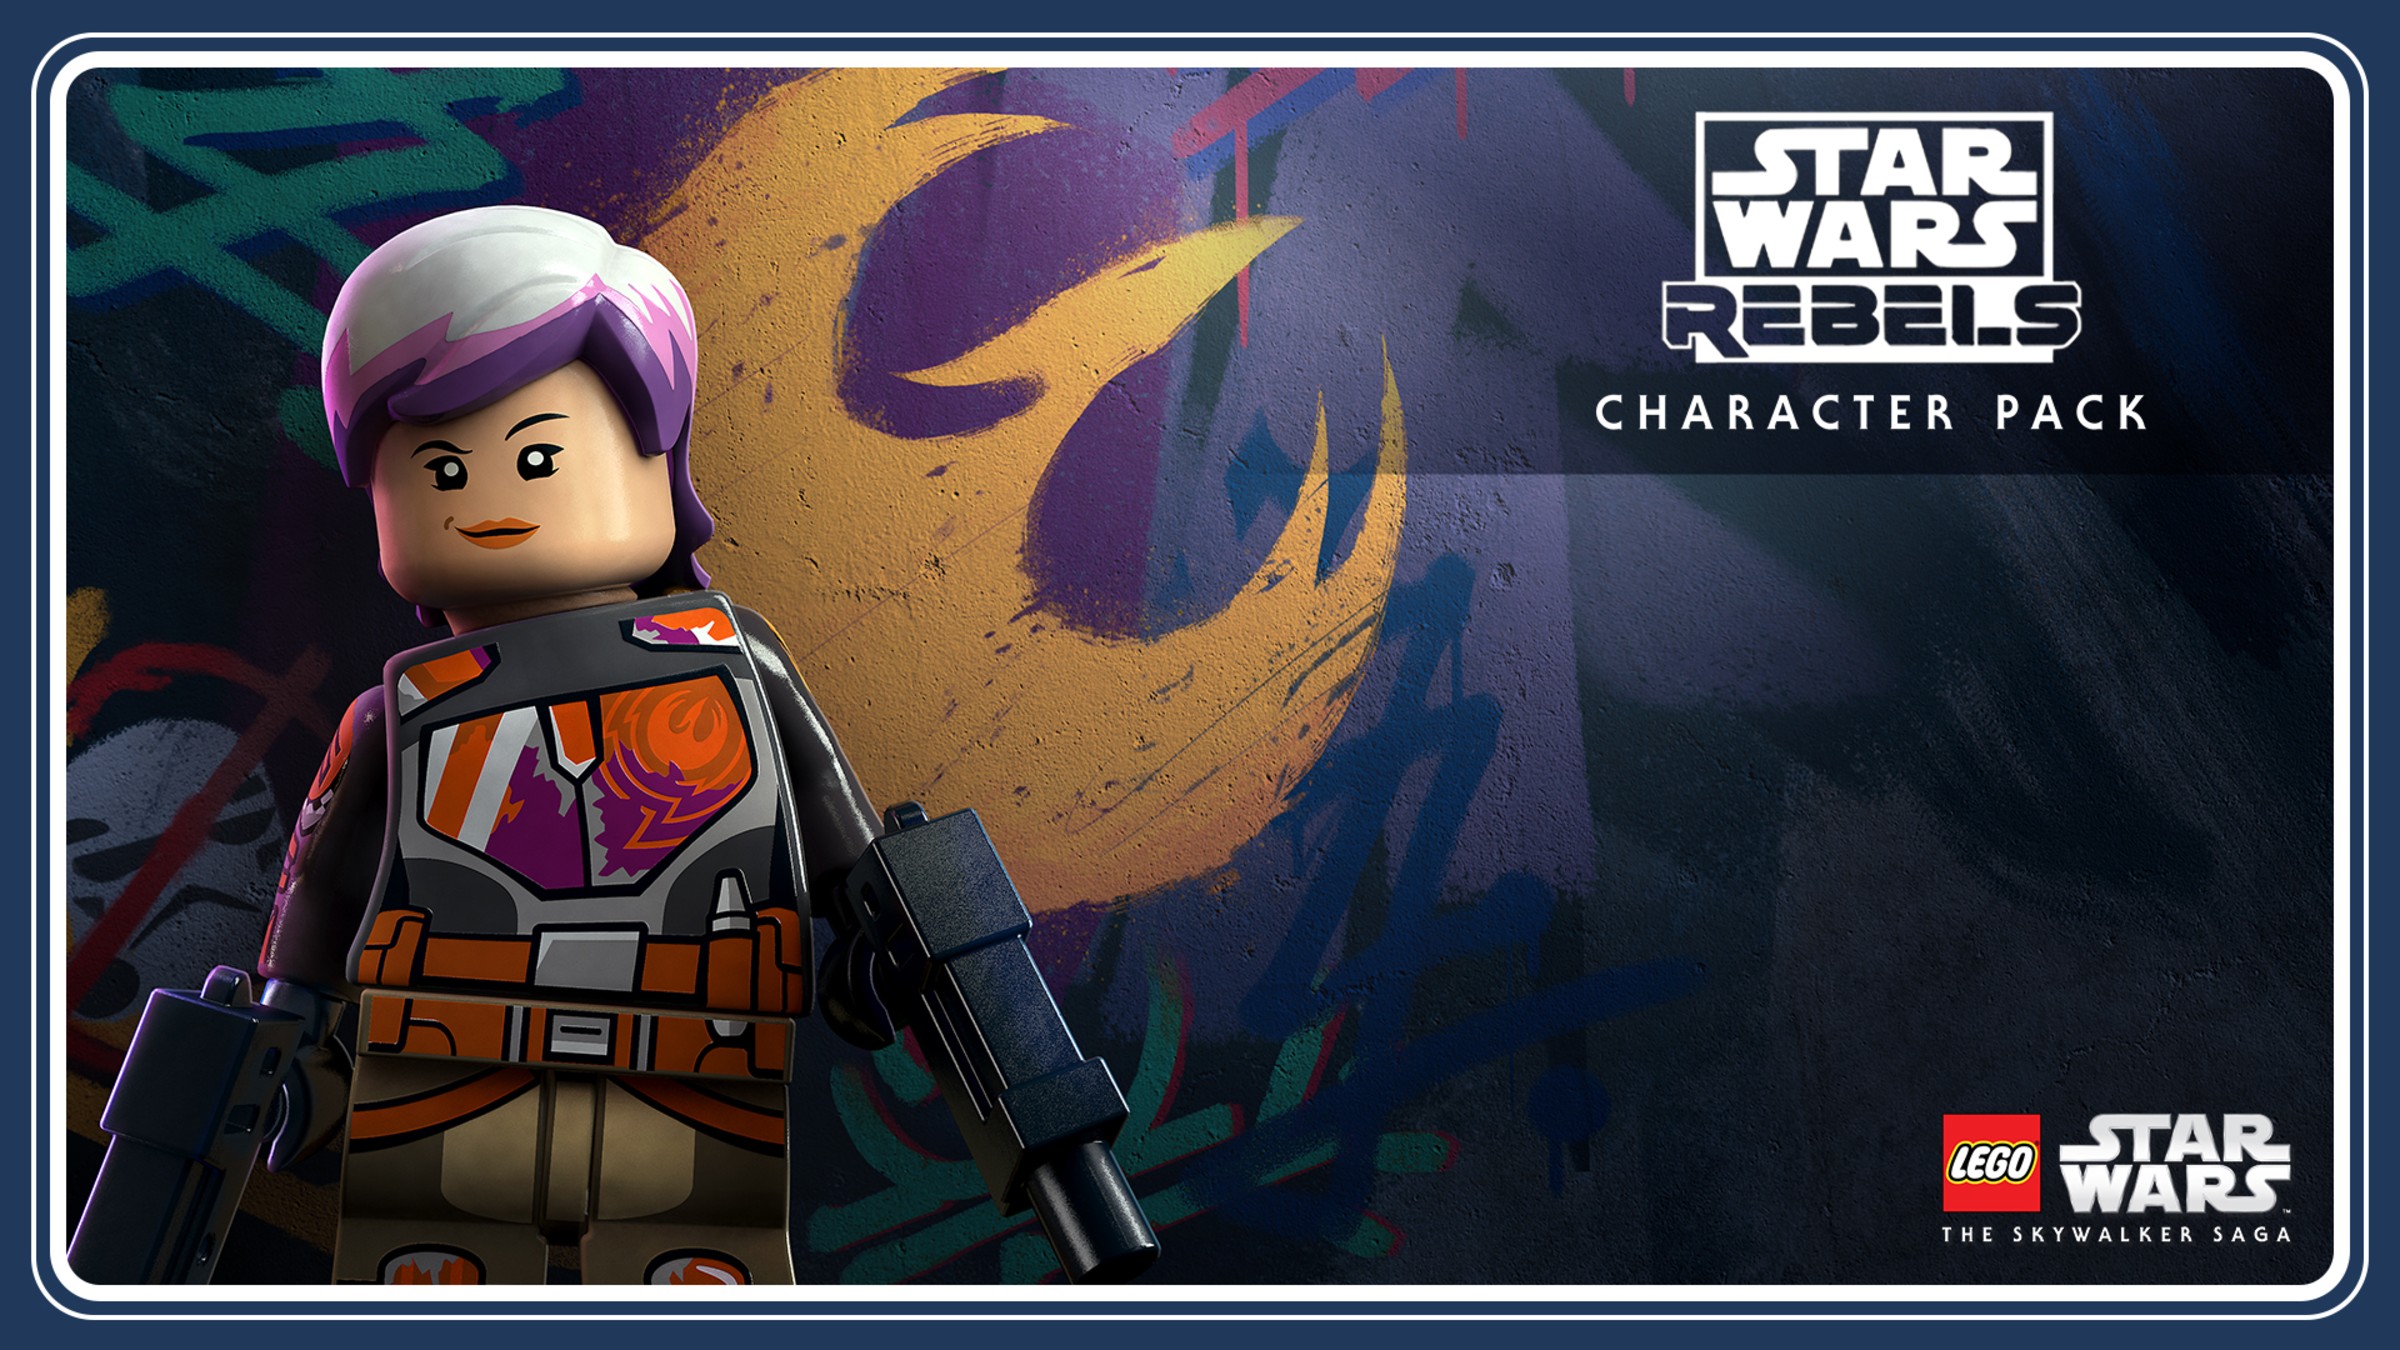 LEGO® Star Wars™: The Skywalker Saga Character Collection 1